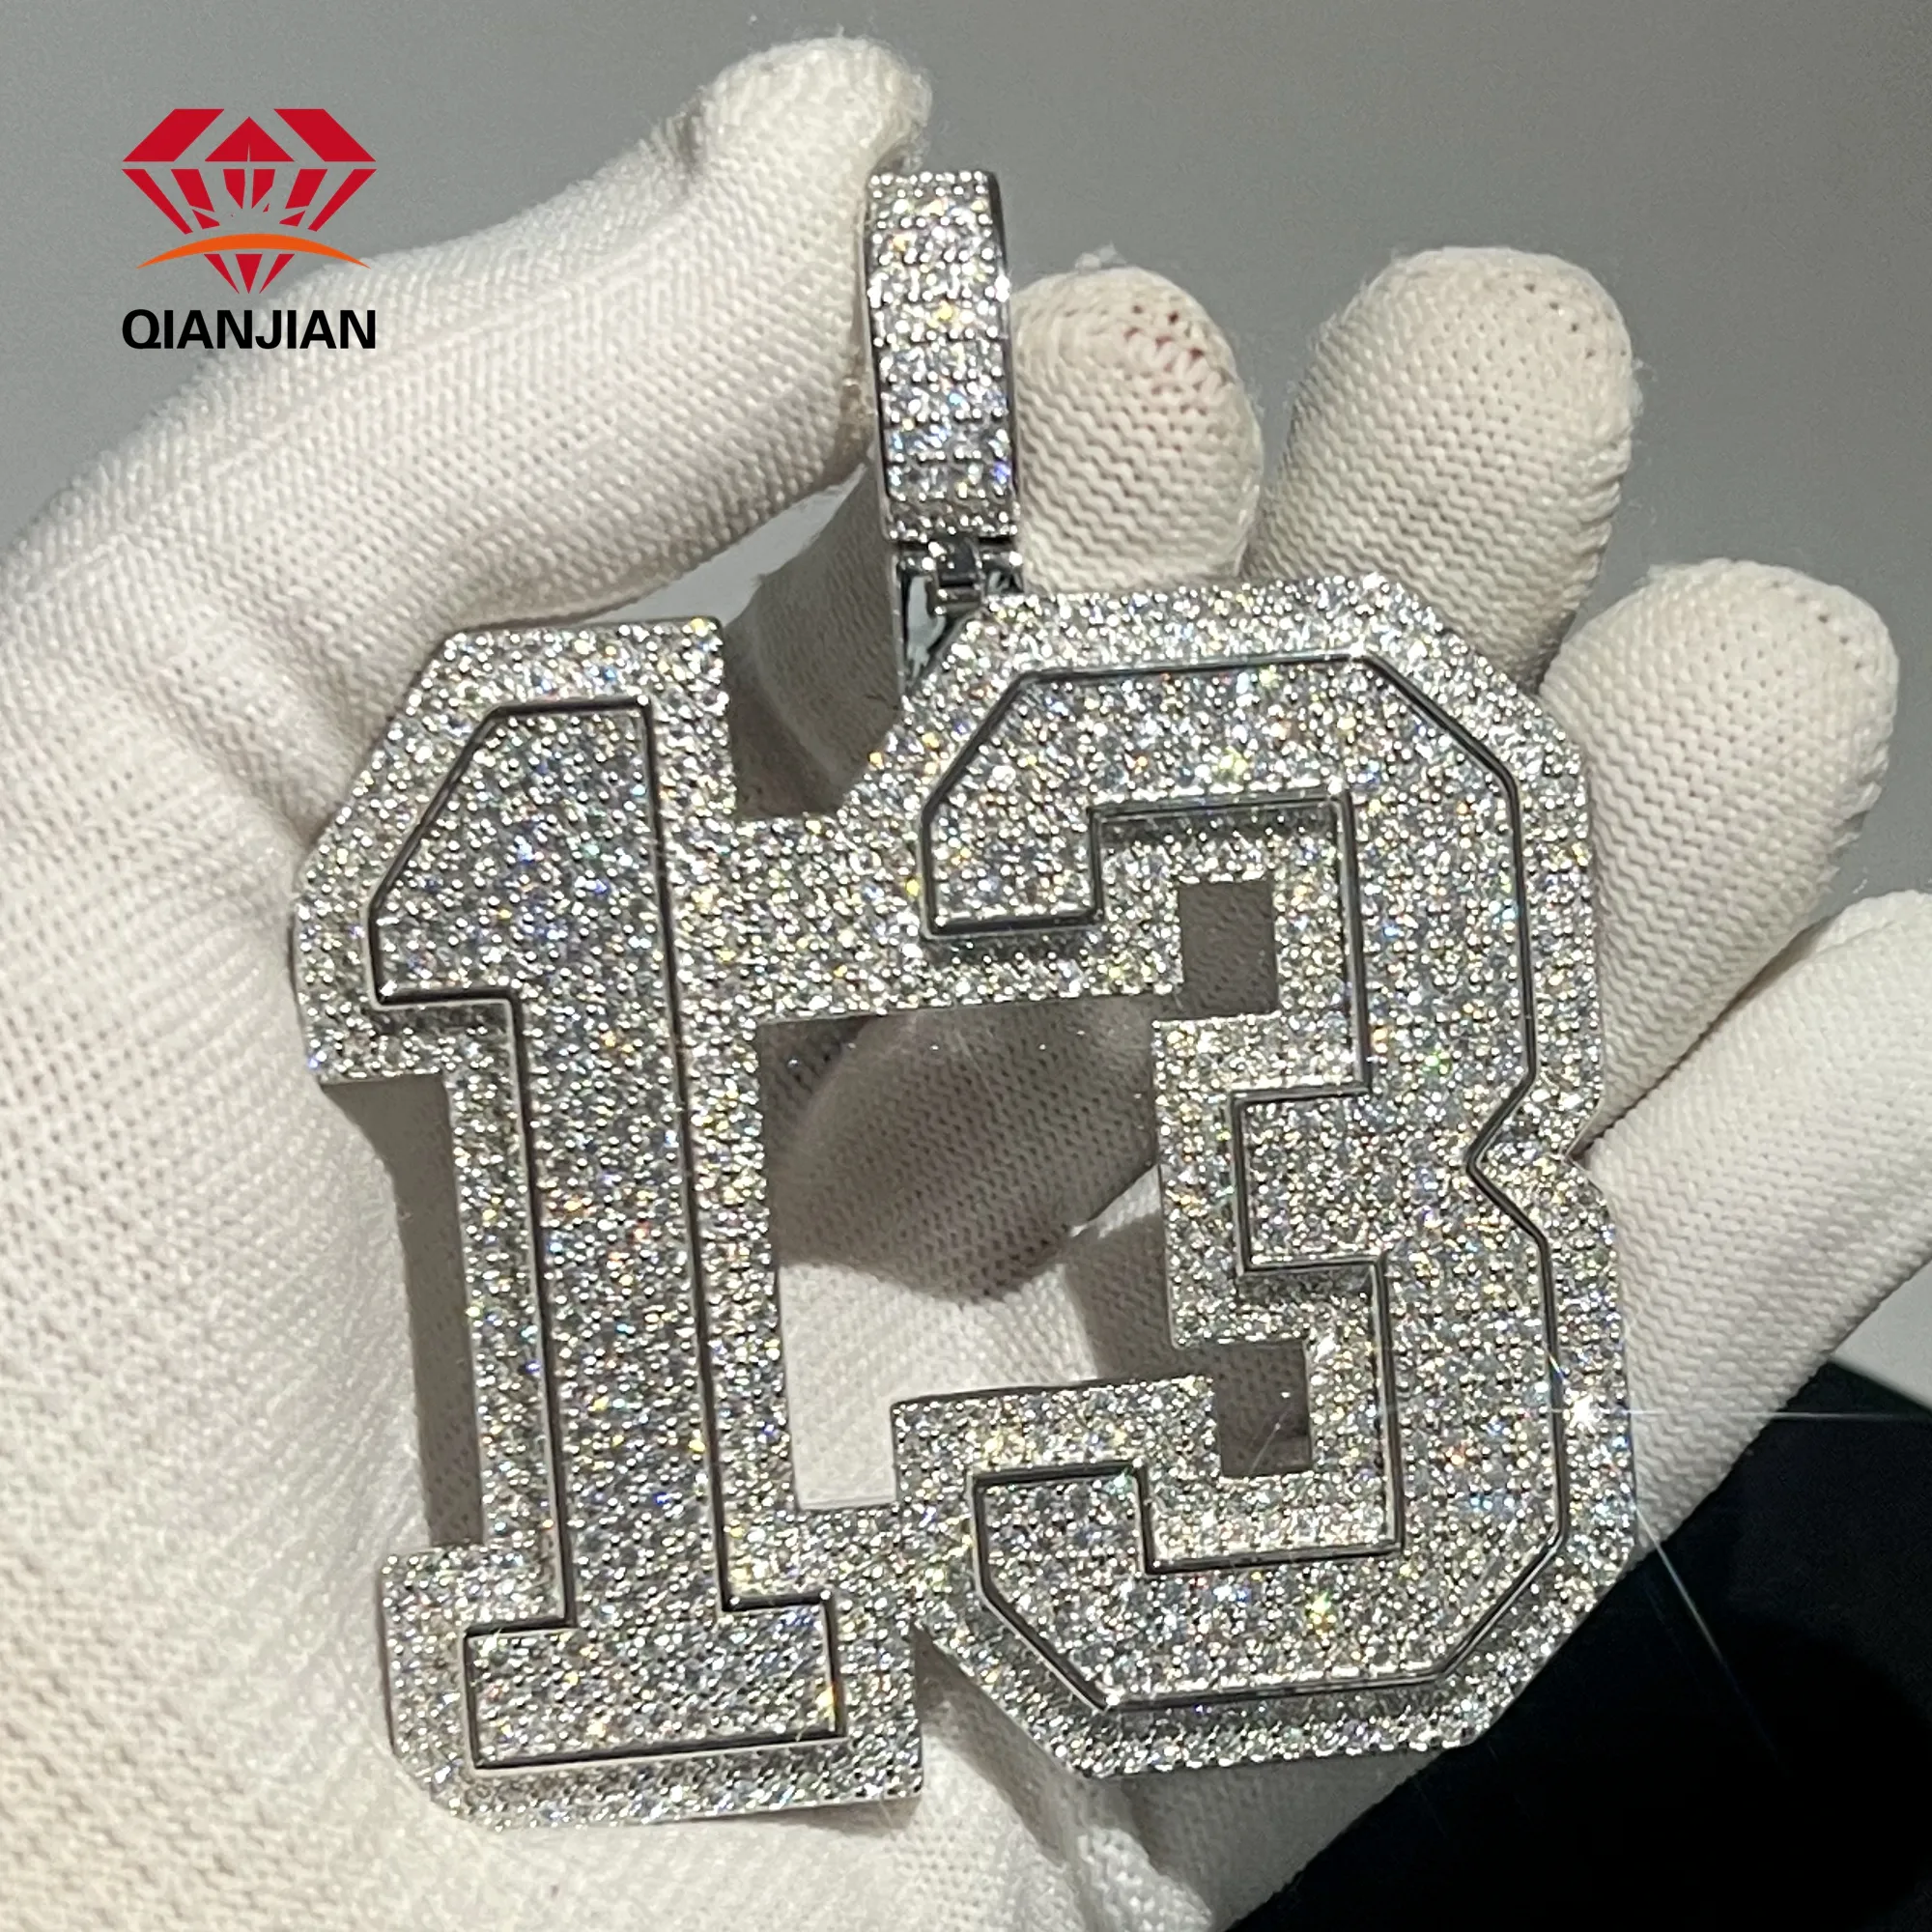 Qianjian उच्च गुणवत्ता 925 चांदी सोना मढ़वाया कस्टम पत्र लटकन Mossanite हीरा पत्थर के साथ